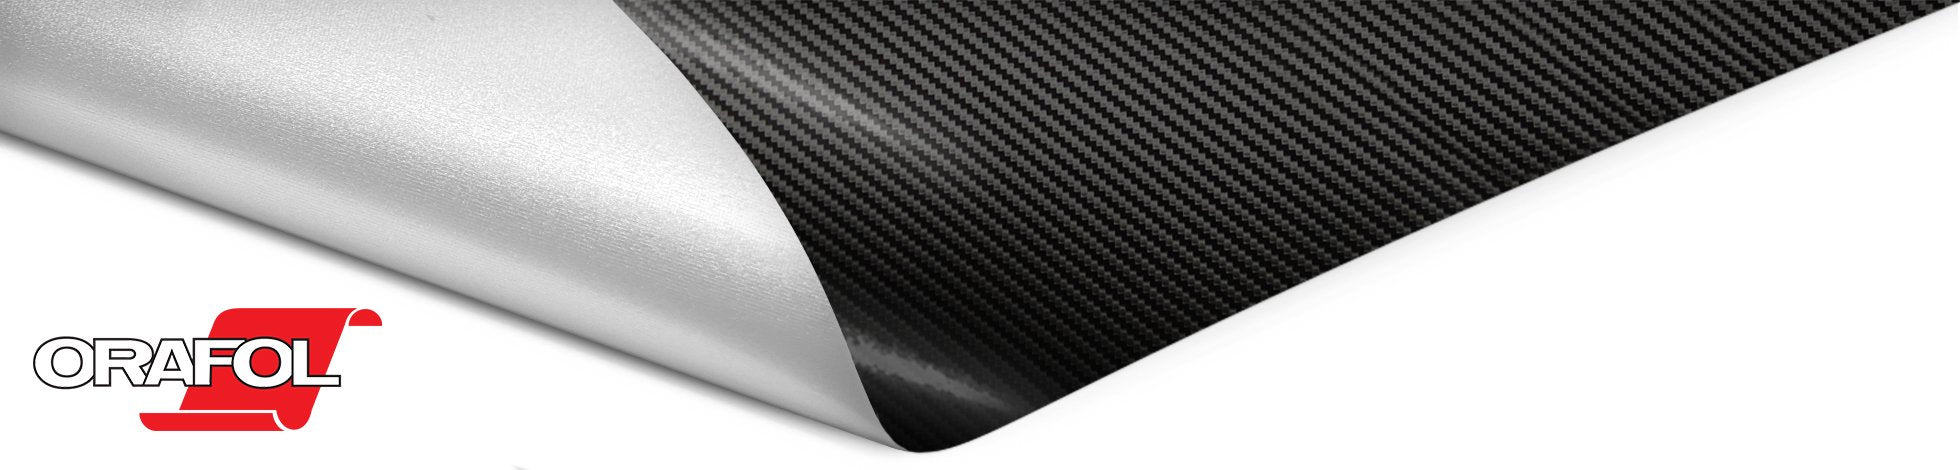 oracal carbon fiber